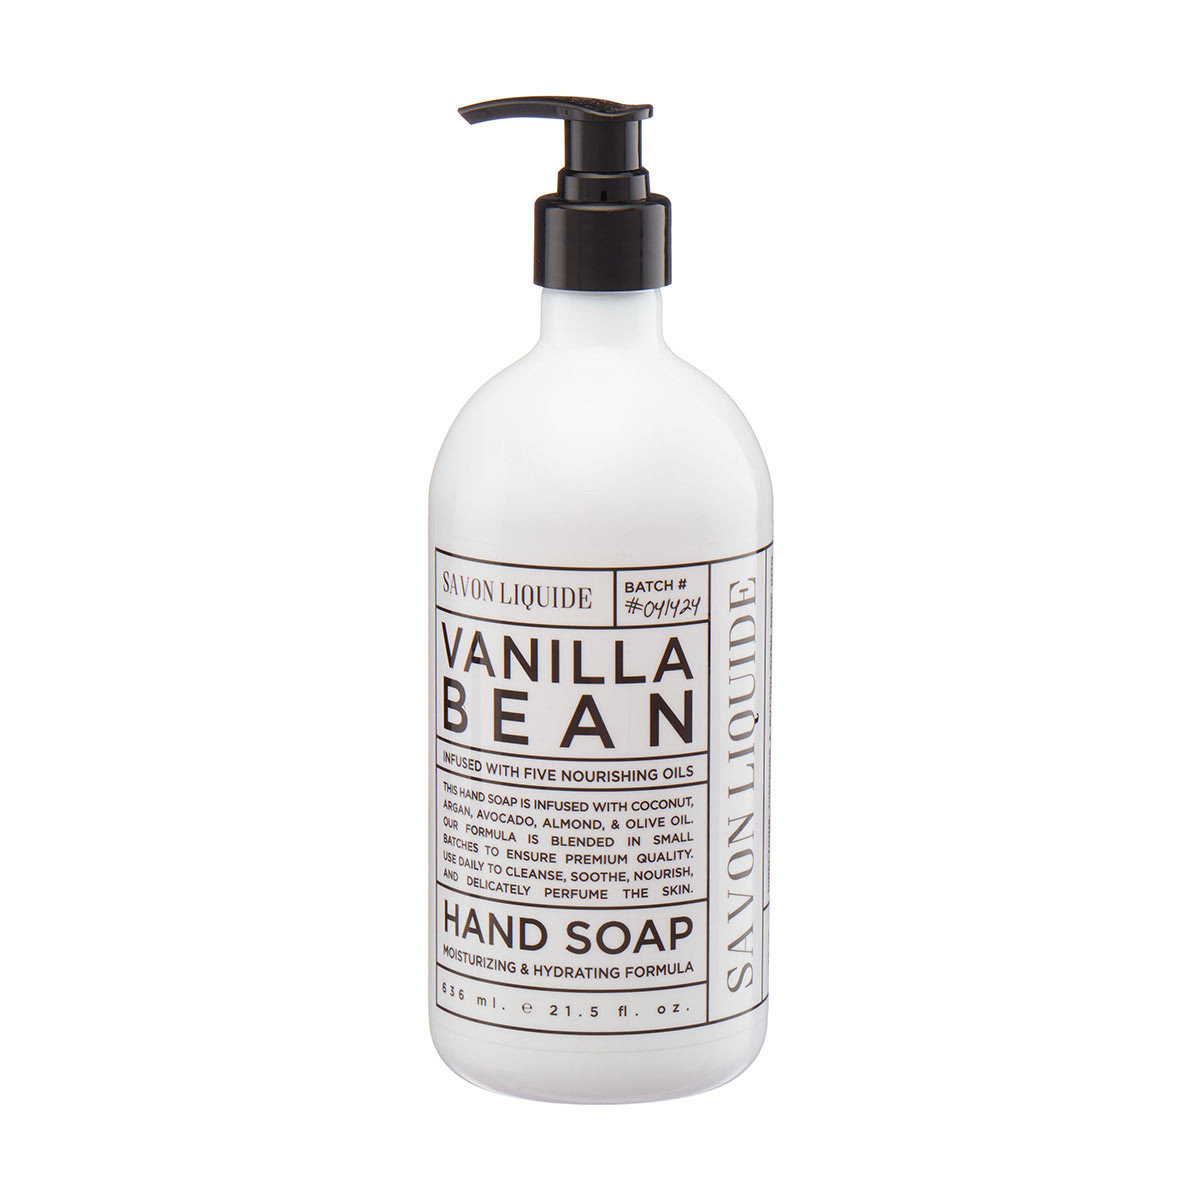 Savon Liquide Vanilla Bean Hand Soap, 21.5 fl. oz.